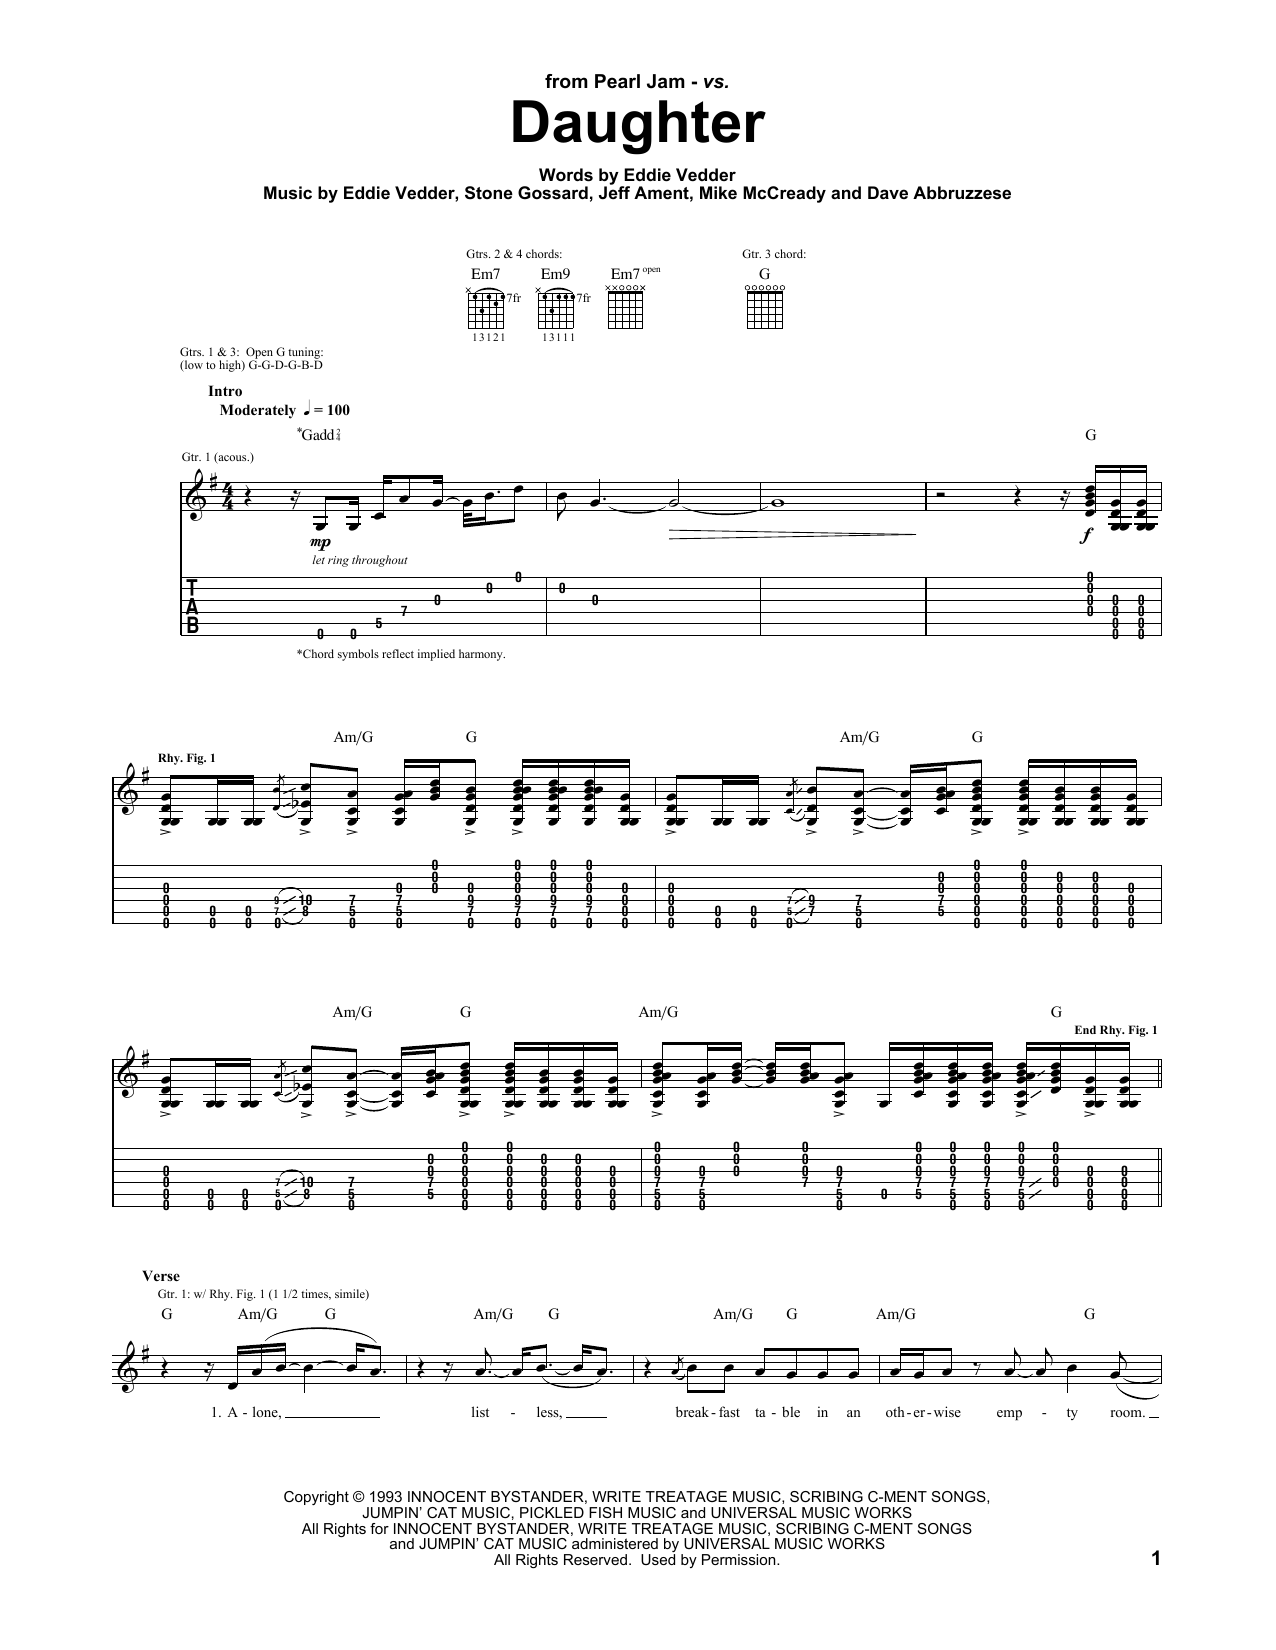 Pearl Jam Daughter Sheet Music Notes & Chords for Easy Guitar Tab - Download or Print PDF